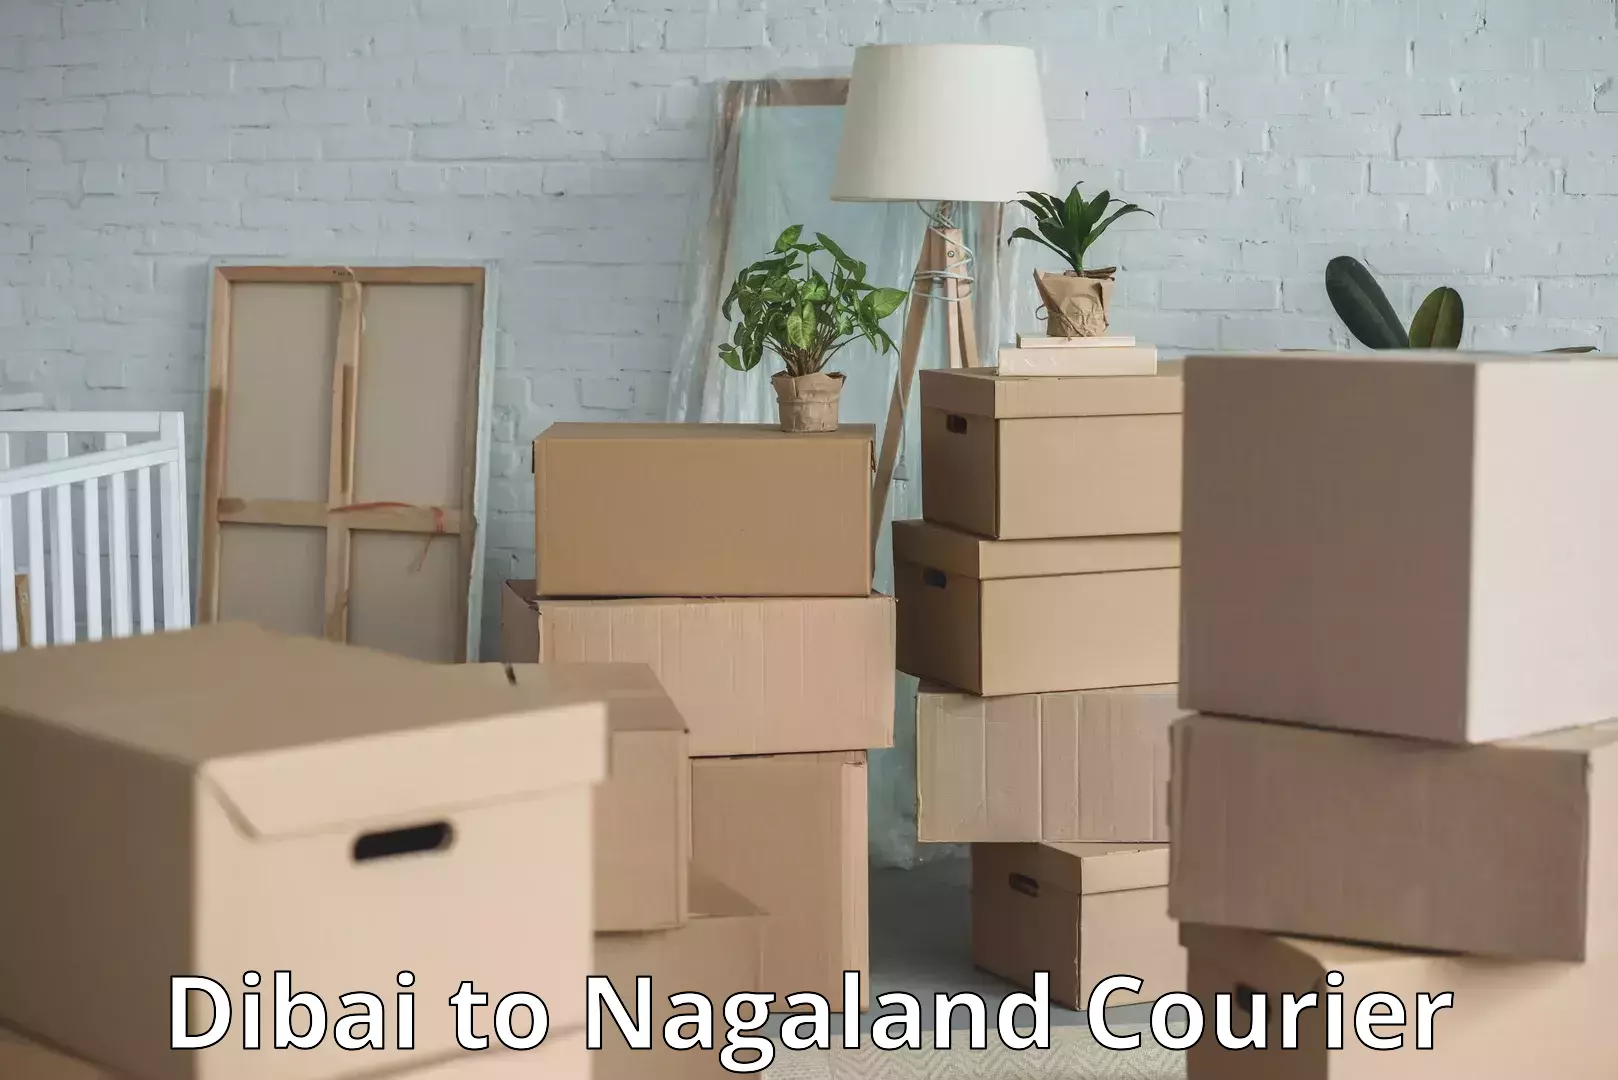 Luggage transport company Dibai to Nagaland